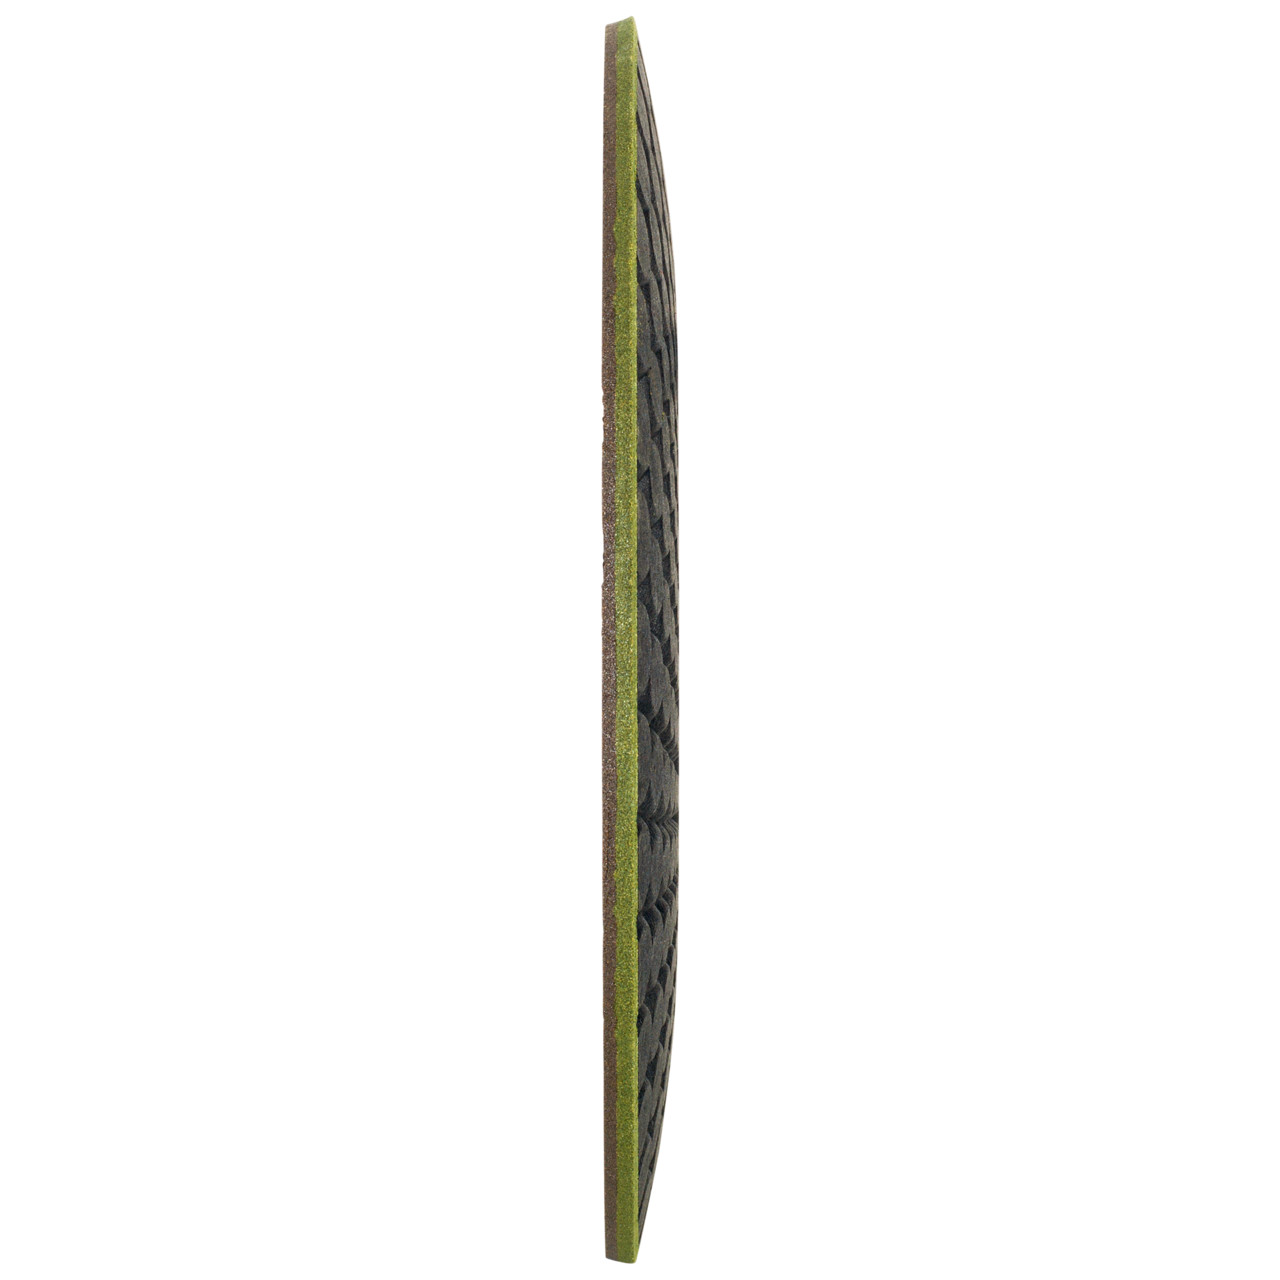 Tyrolit RONDELLER DxH 115x22.23 Per pietra, forma: 29RON (RondellerÂ®), Art. 908233